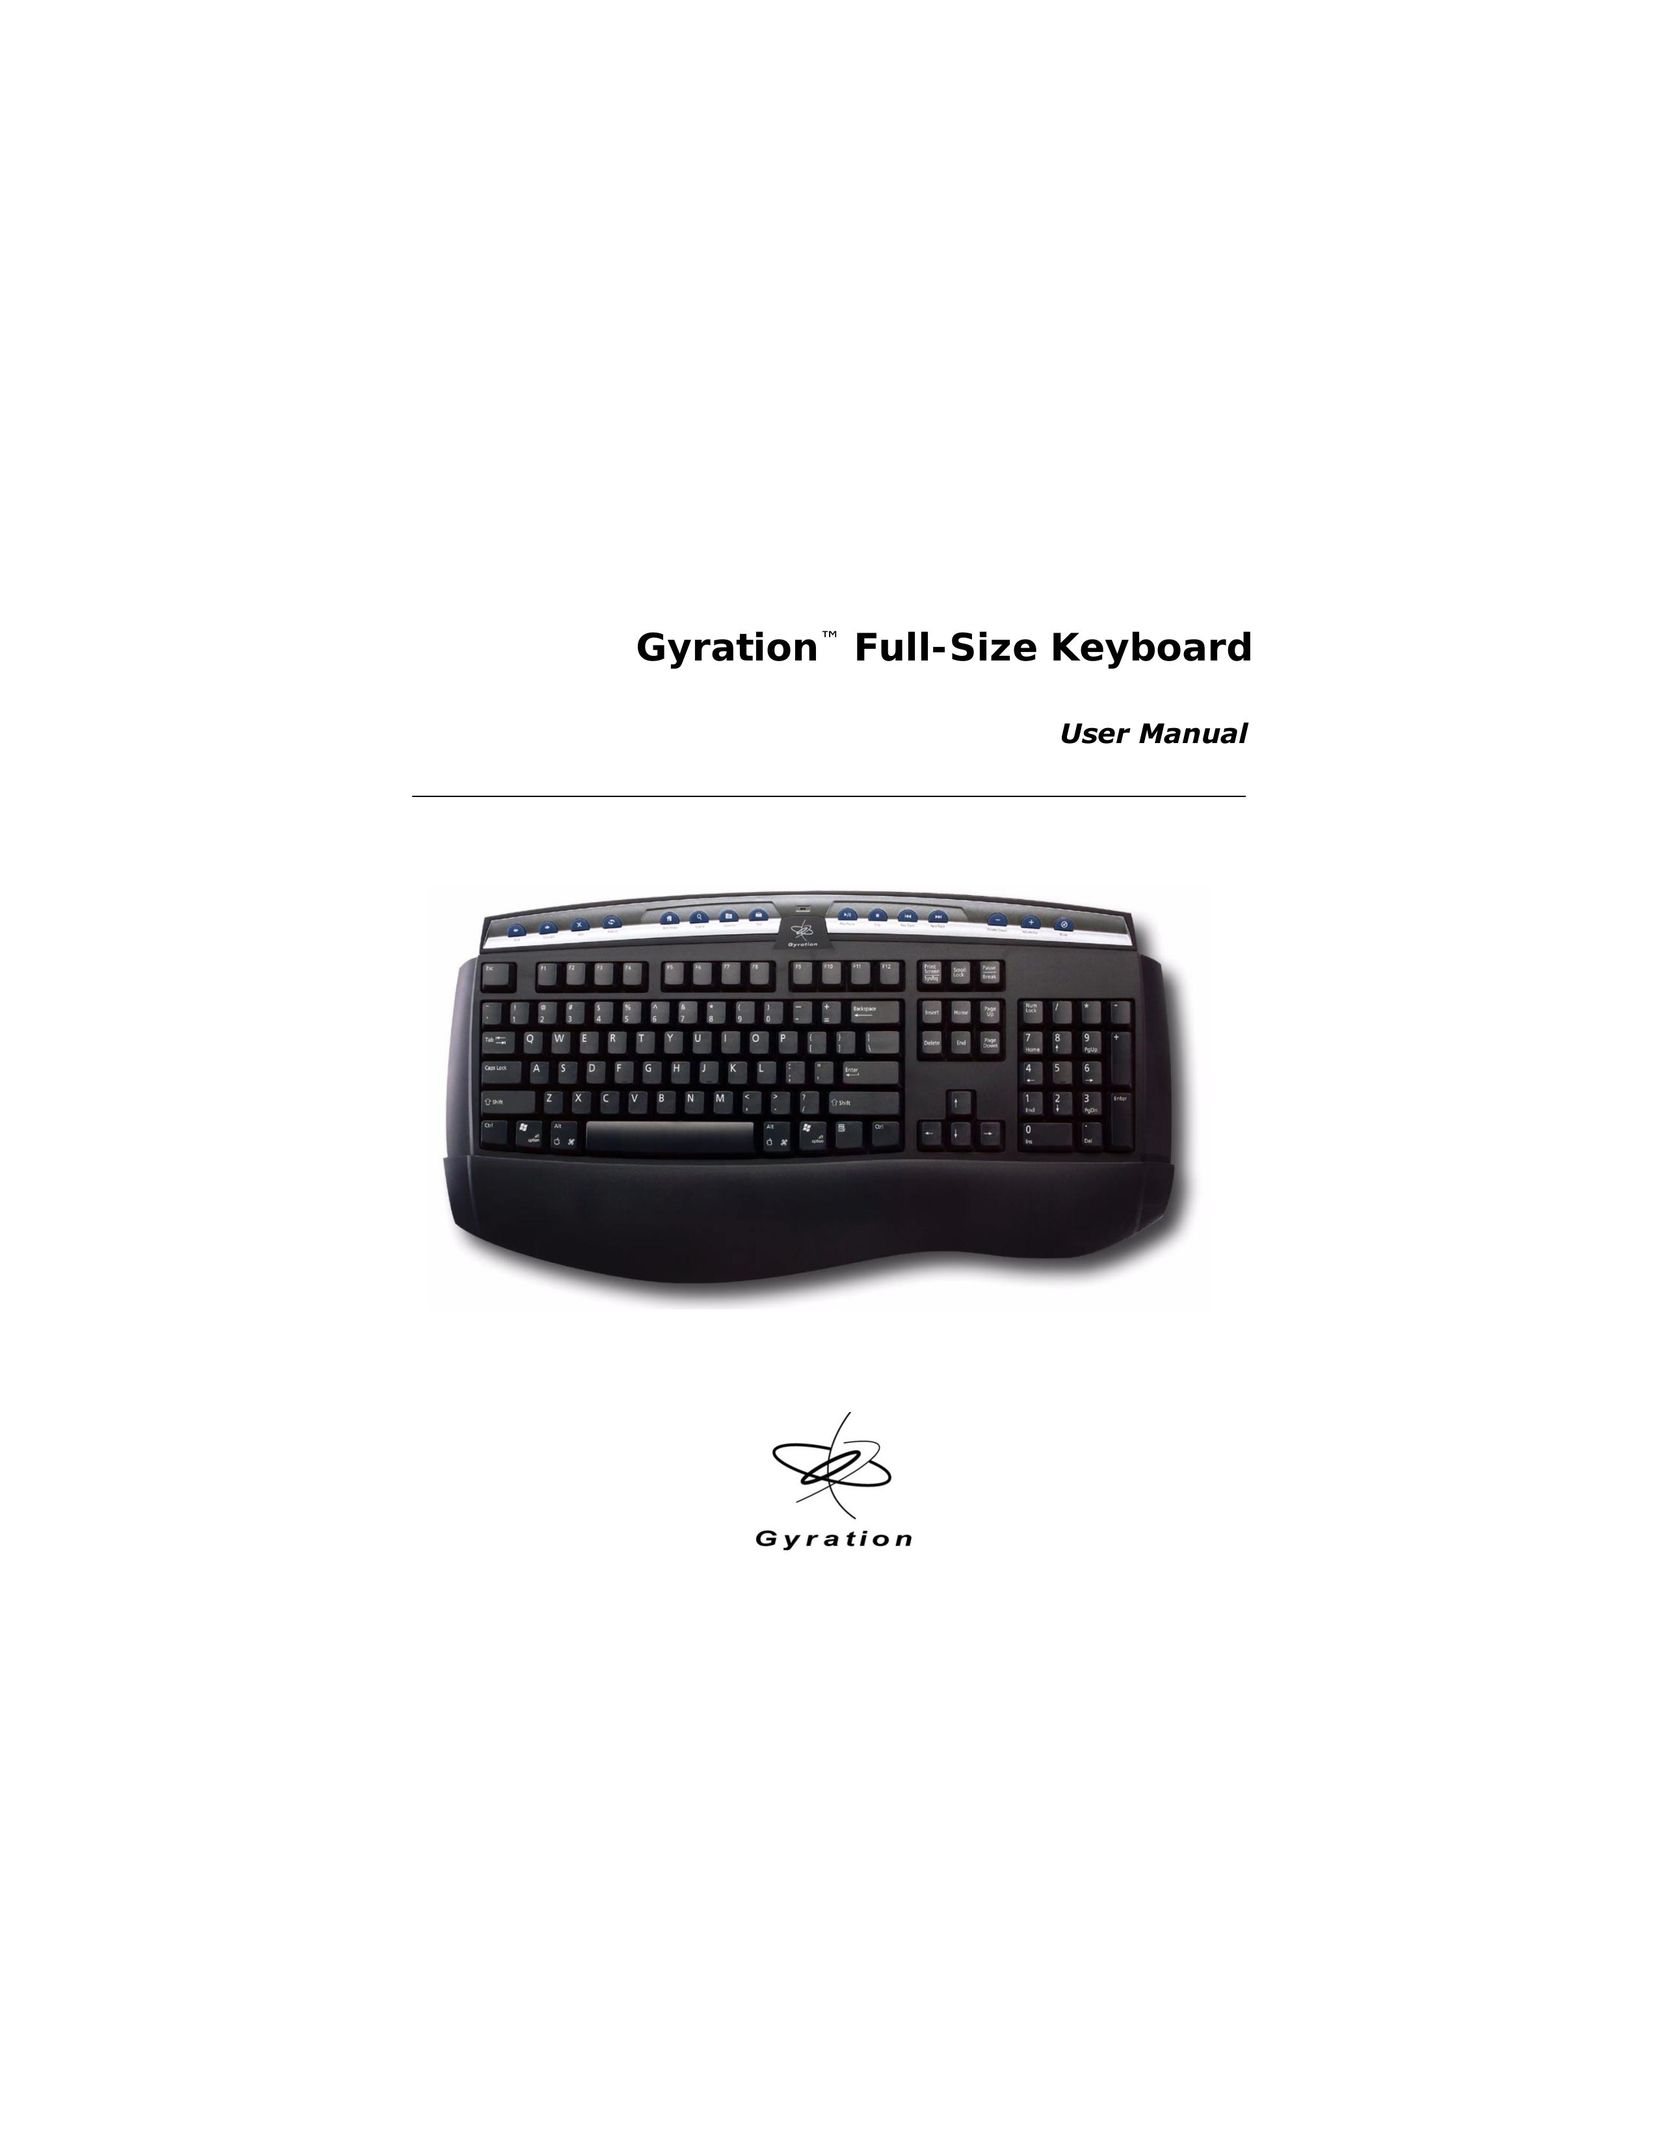 Gyration Full-Size Keyboard Mouse User Manual